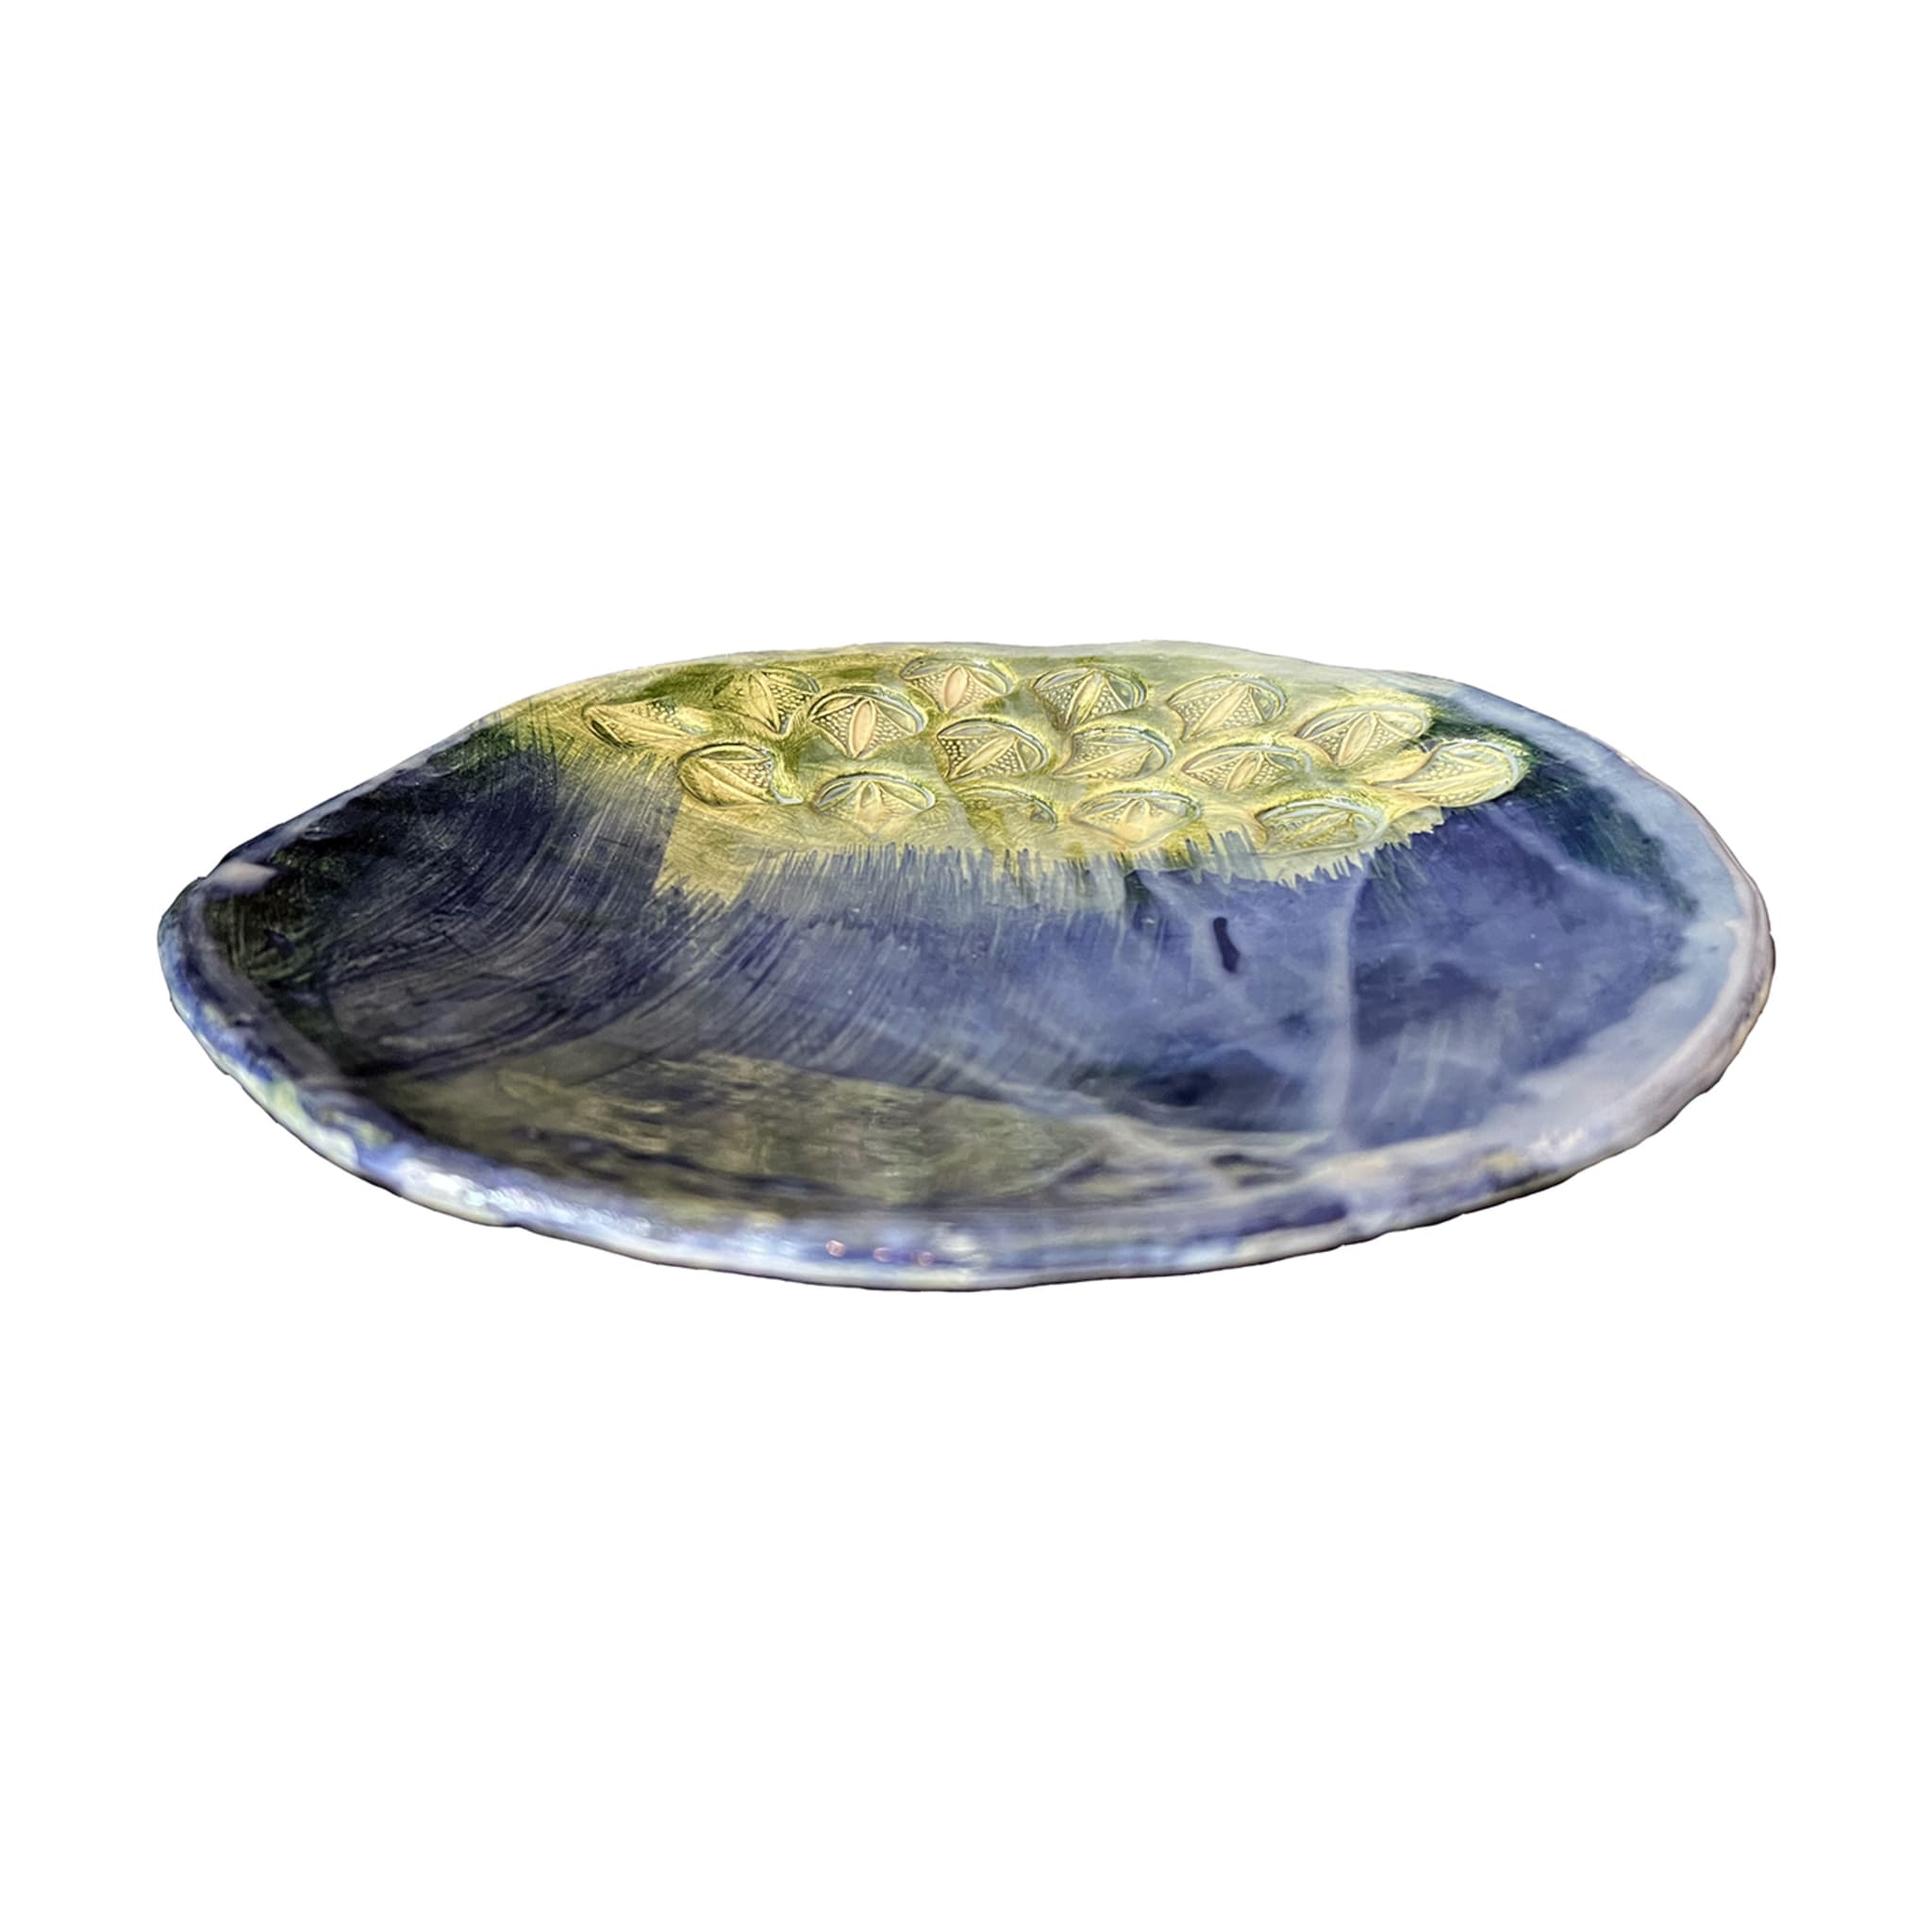 Mercury decorative Plate - Alternative view 1